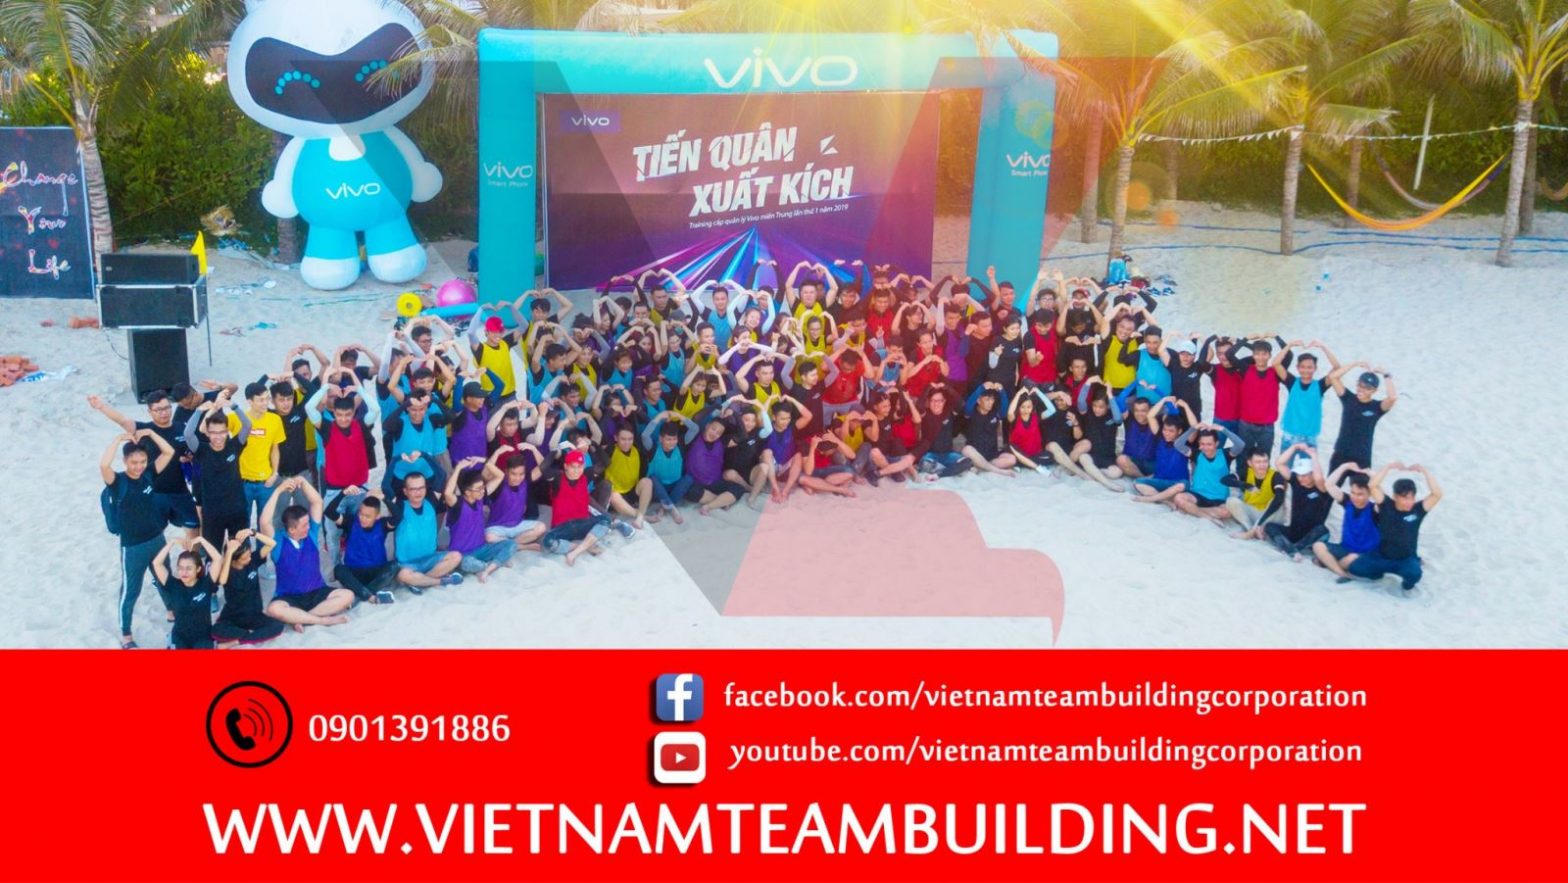 Vietnam Team Buildinig, Team Building company in Vietnam, HCMc, Saigon